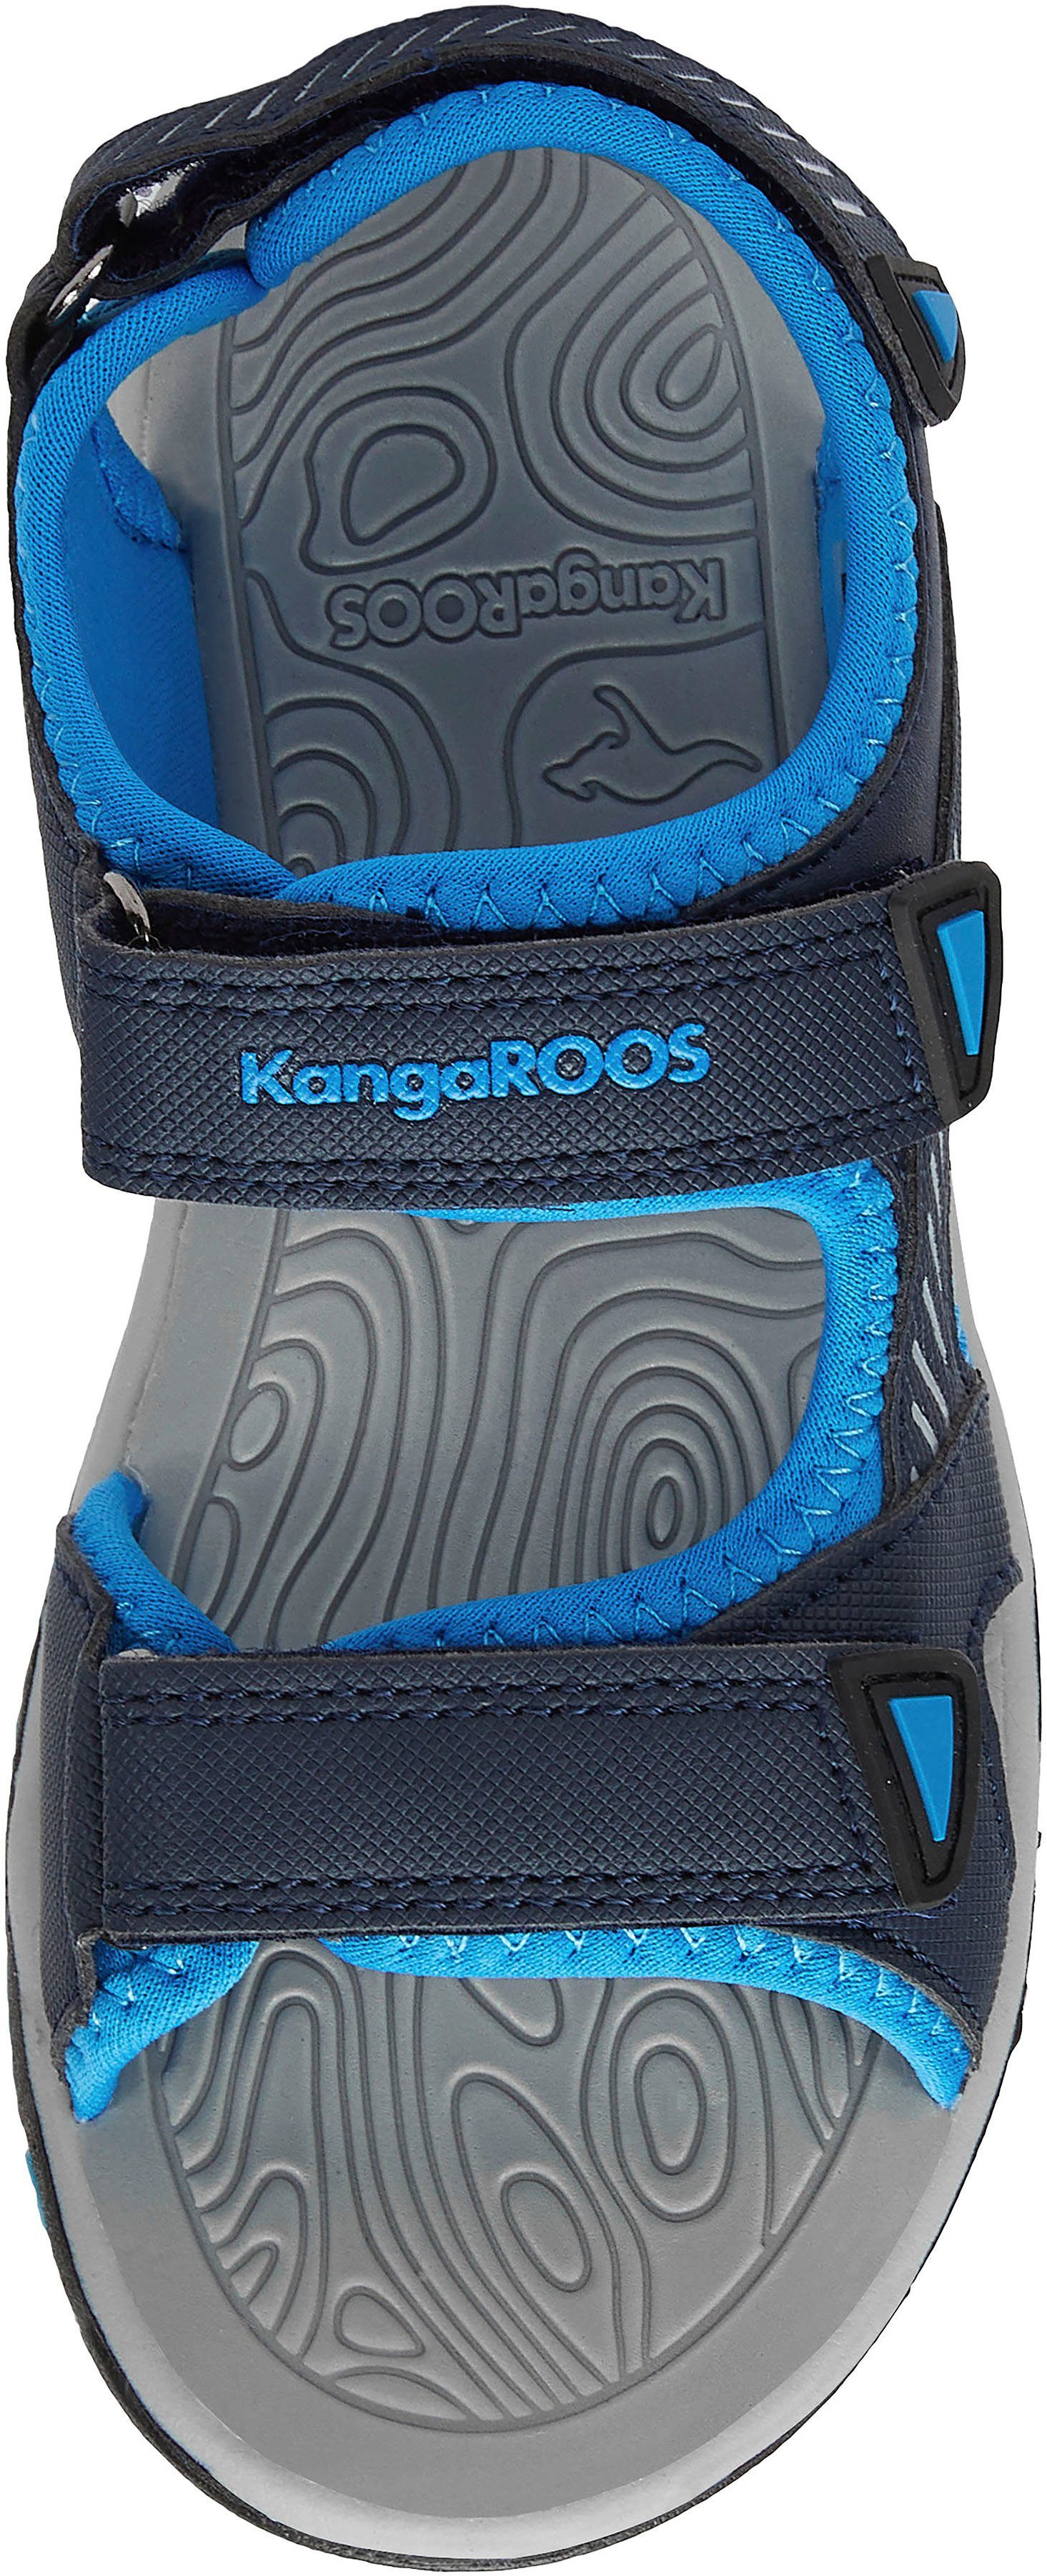 Barbo blau mit K-Celtic Sandale KangaROOS Klettverschluss